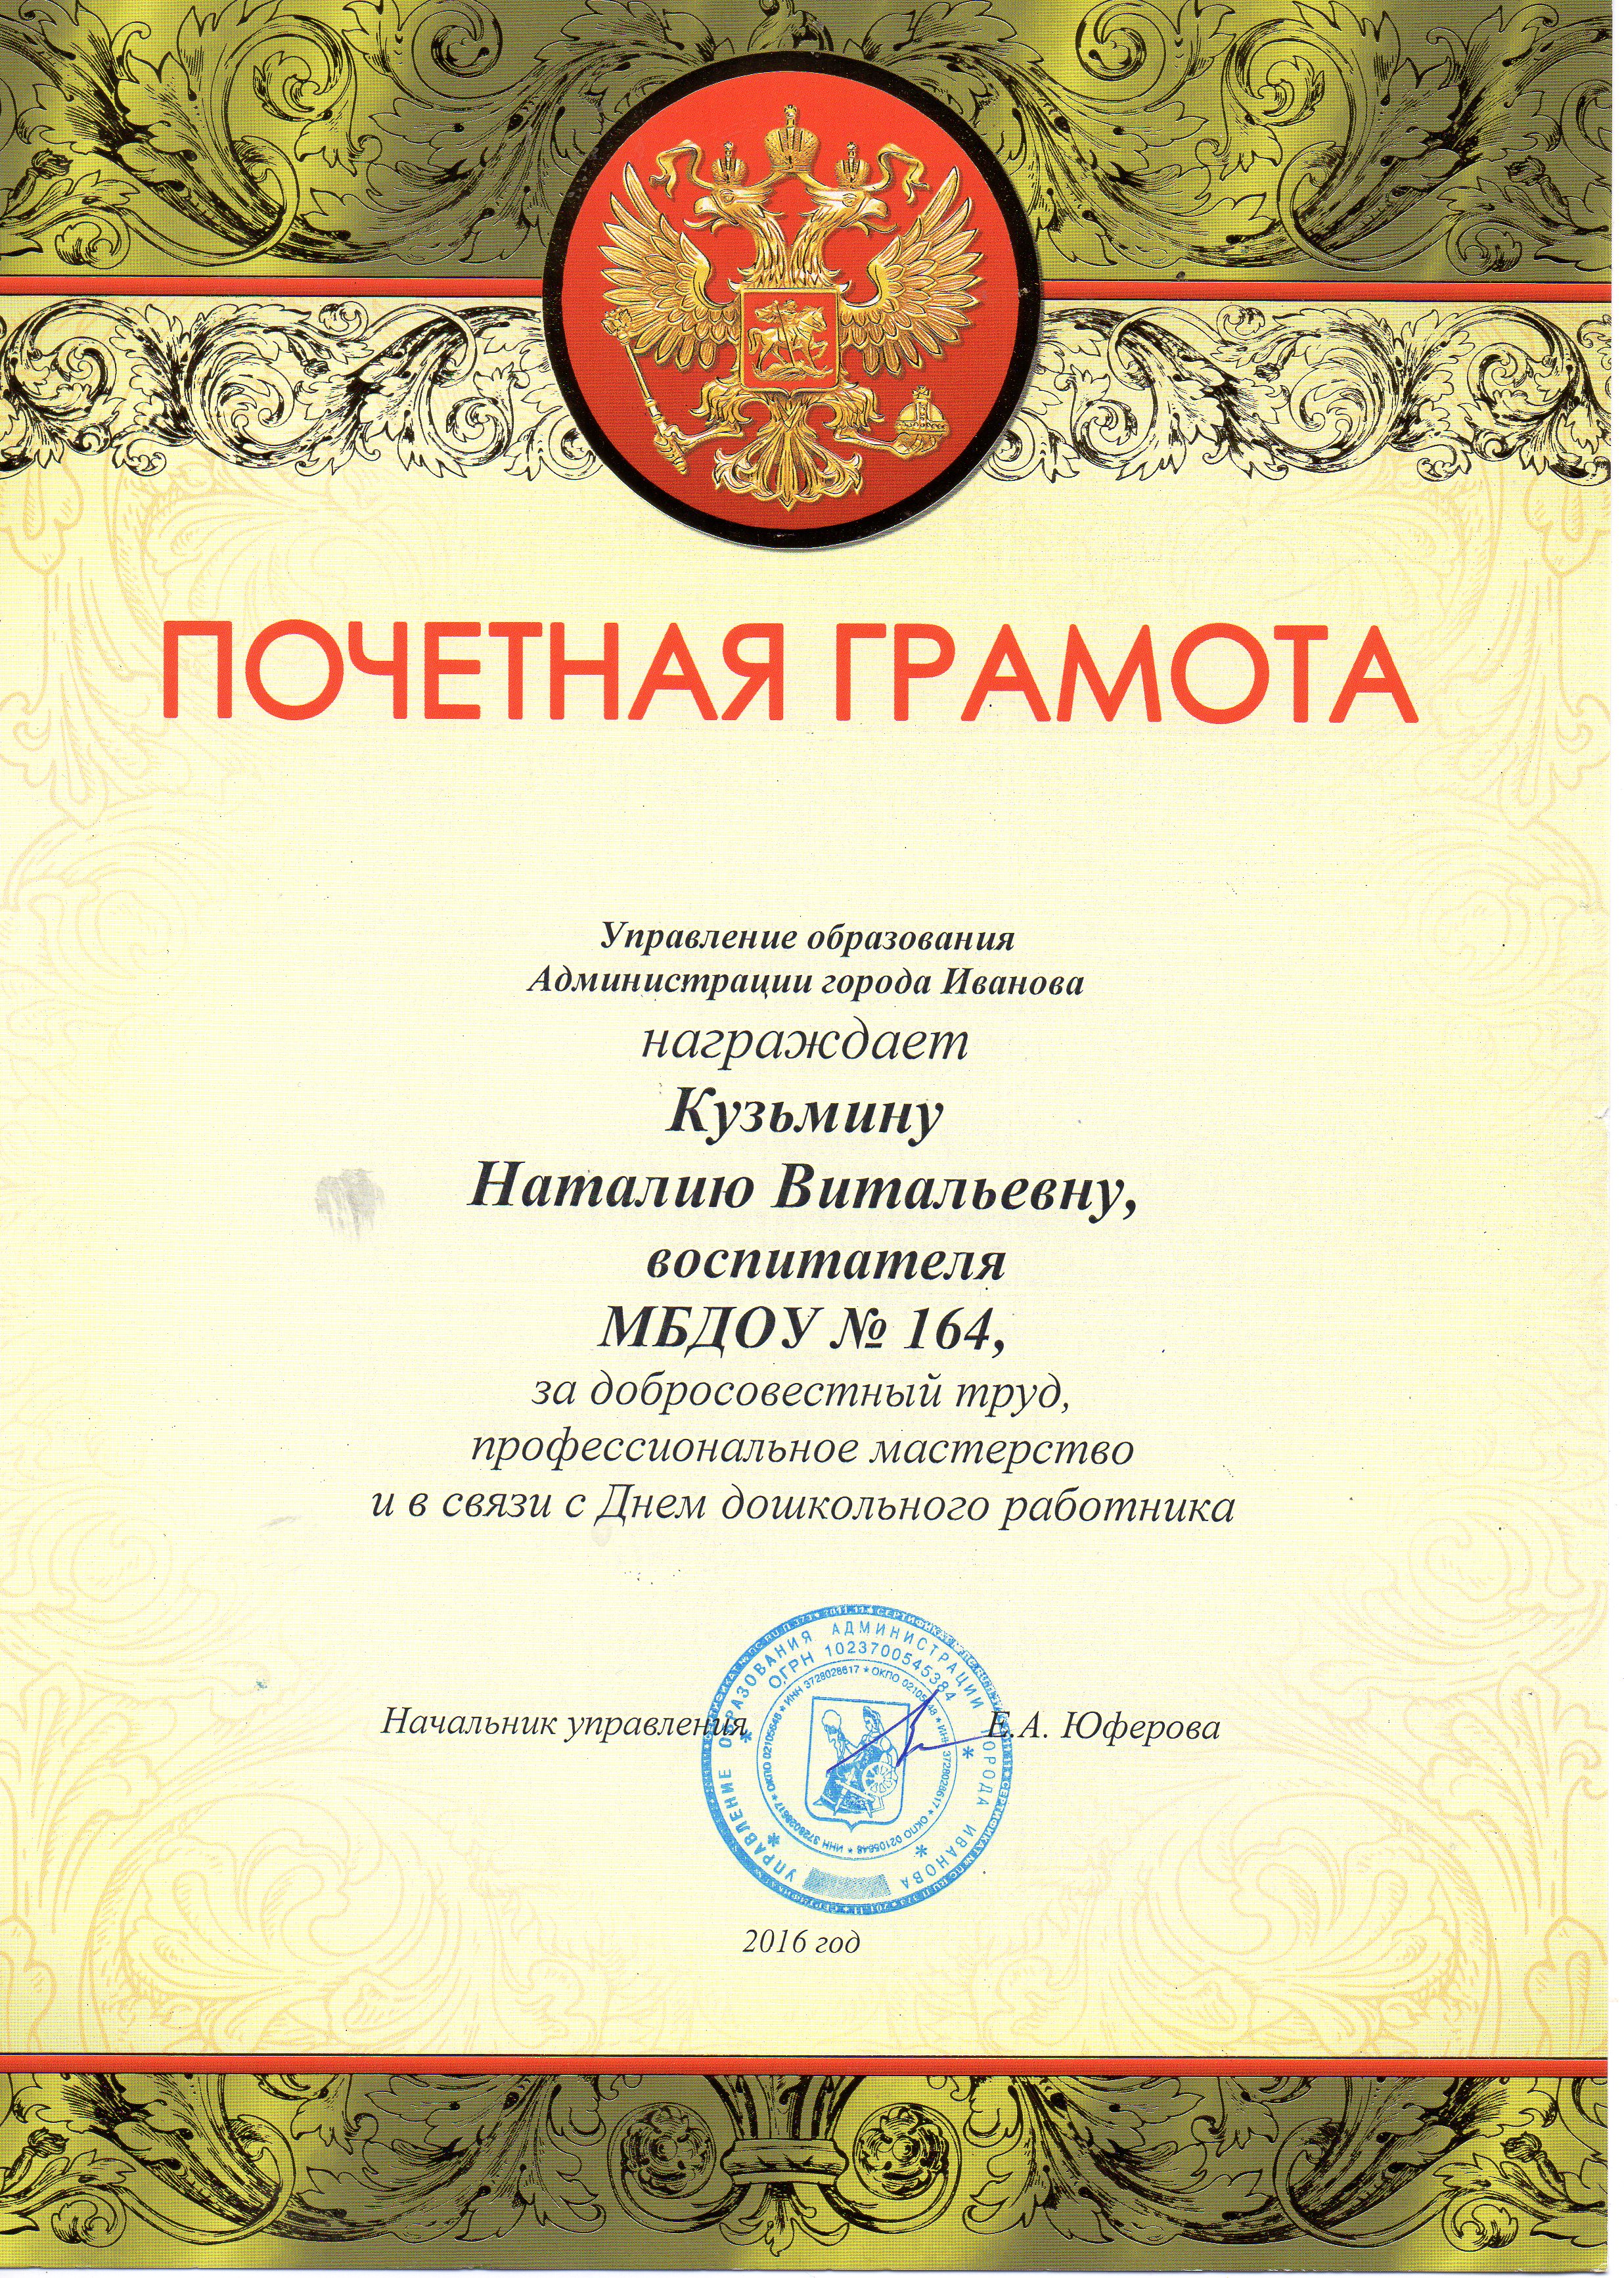 Почётная грамота администрации г. Иванова.jpg